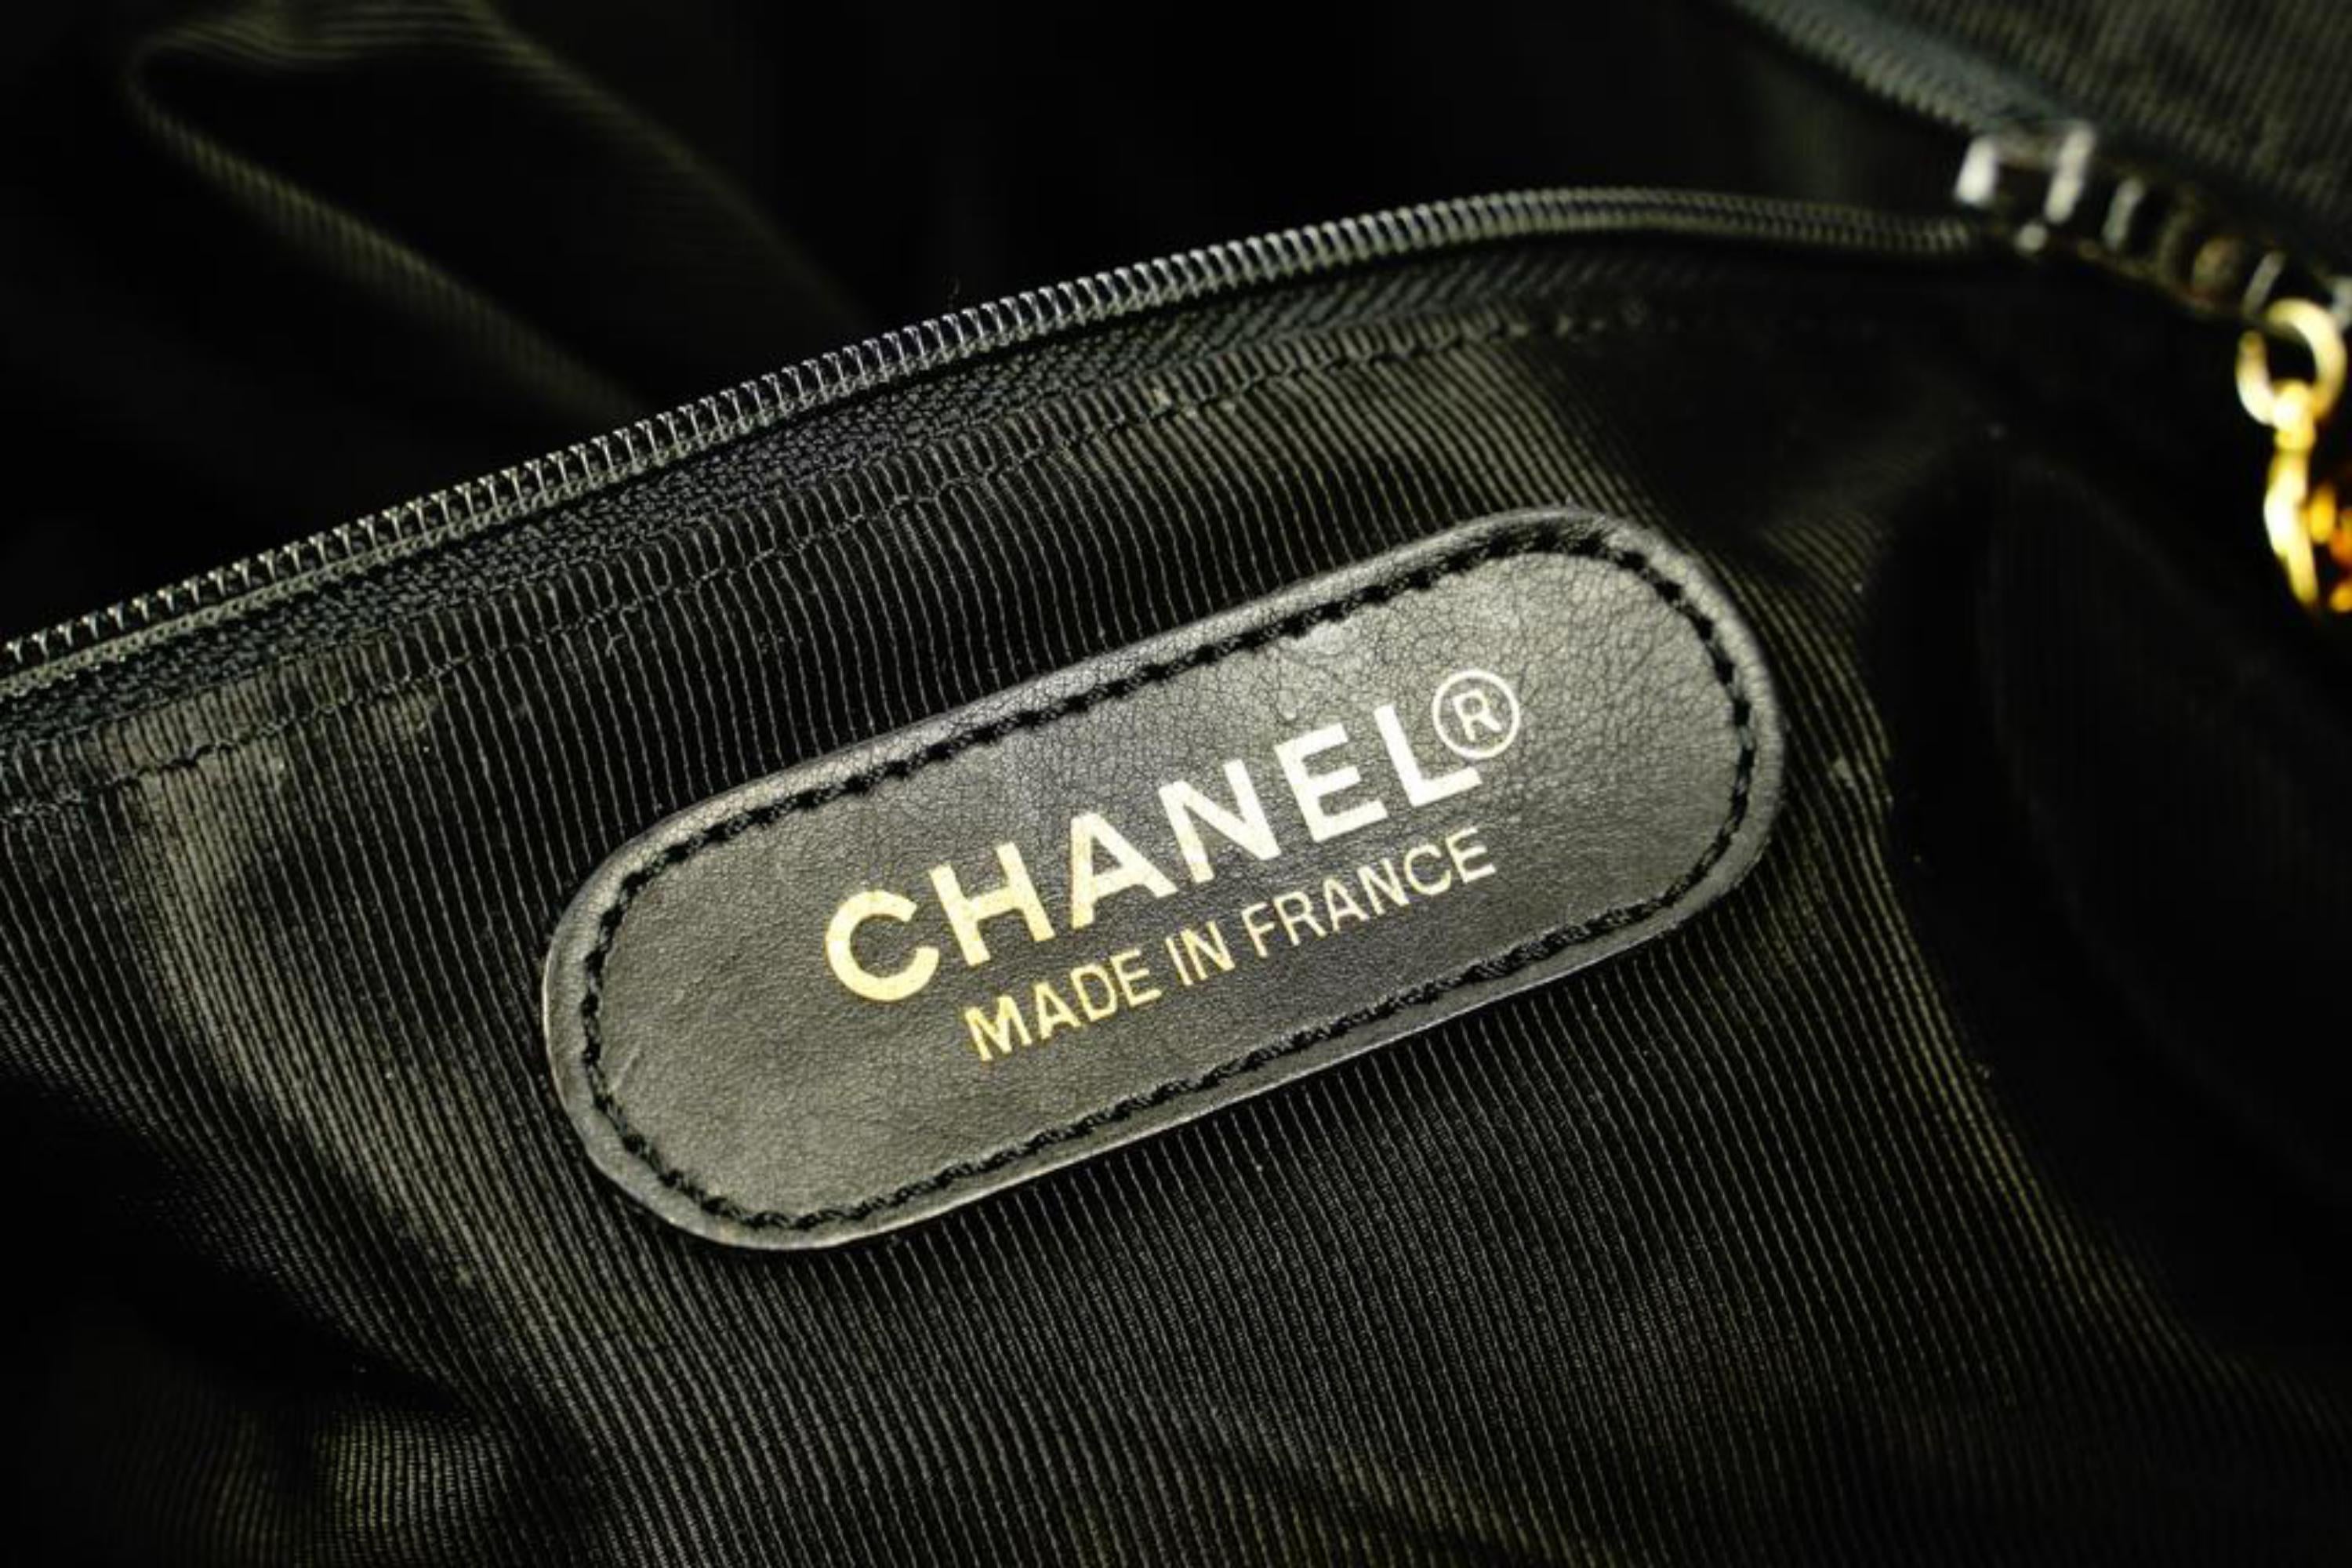 Chanel Vintage Luggage